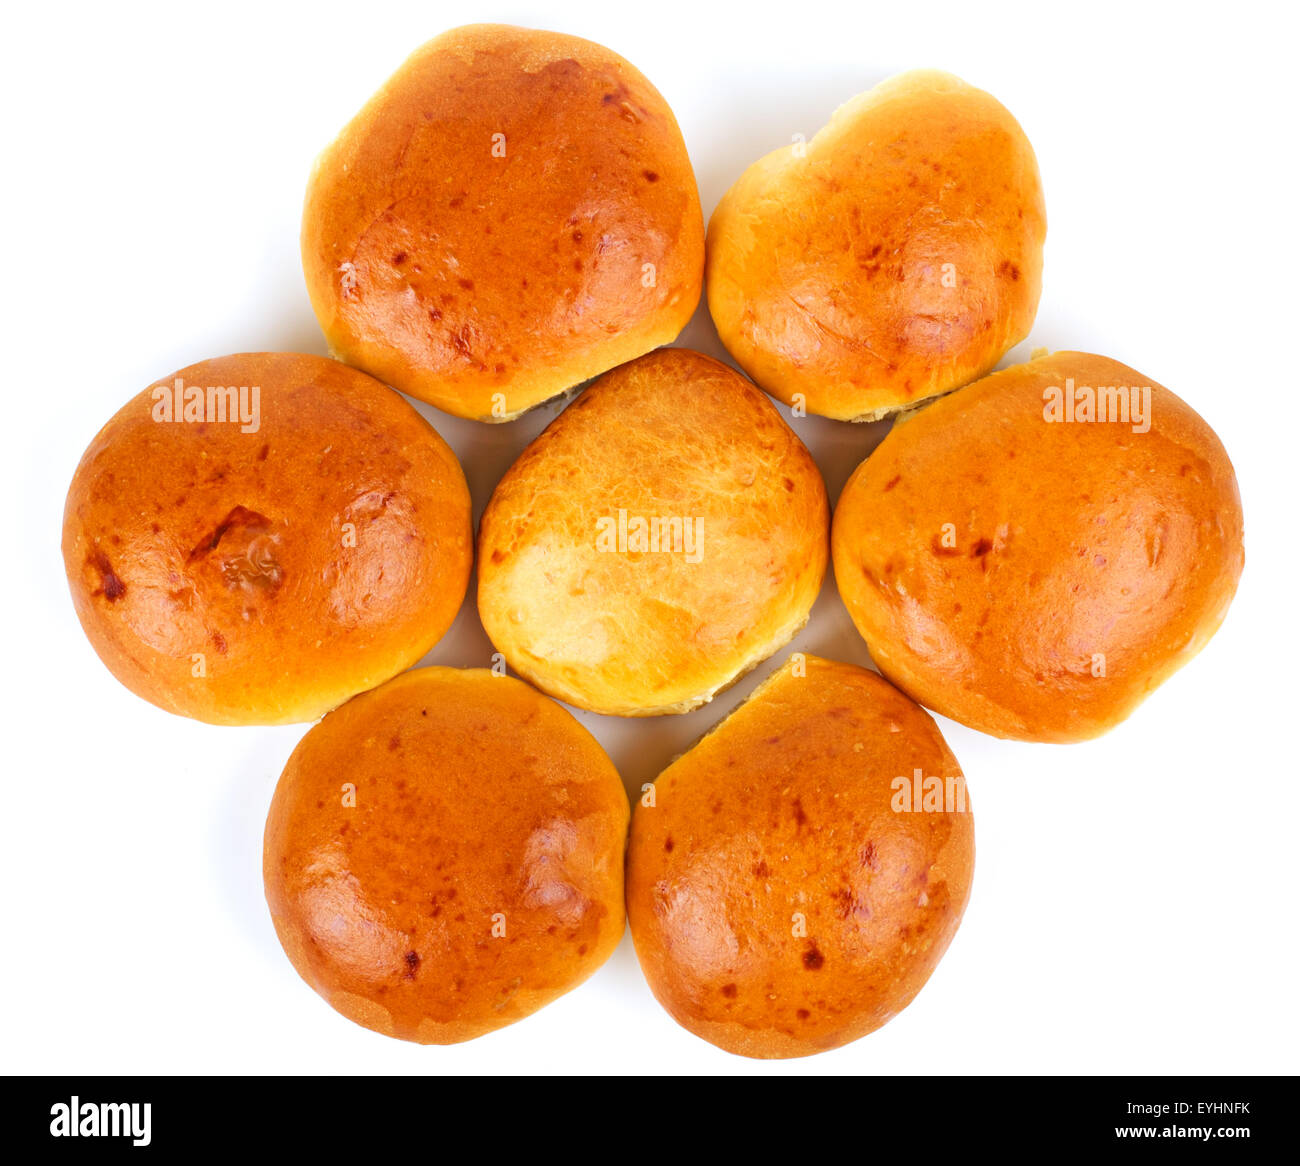 the freshly baked Bread rolls on white background Stock Photo